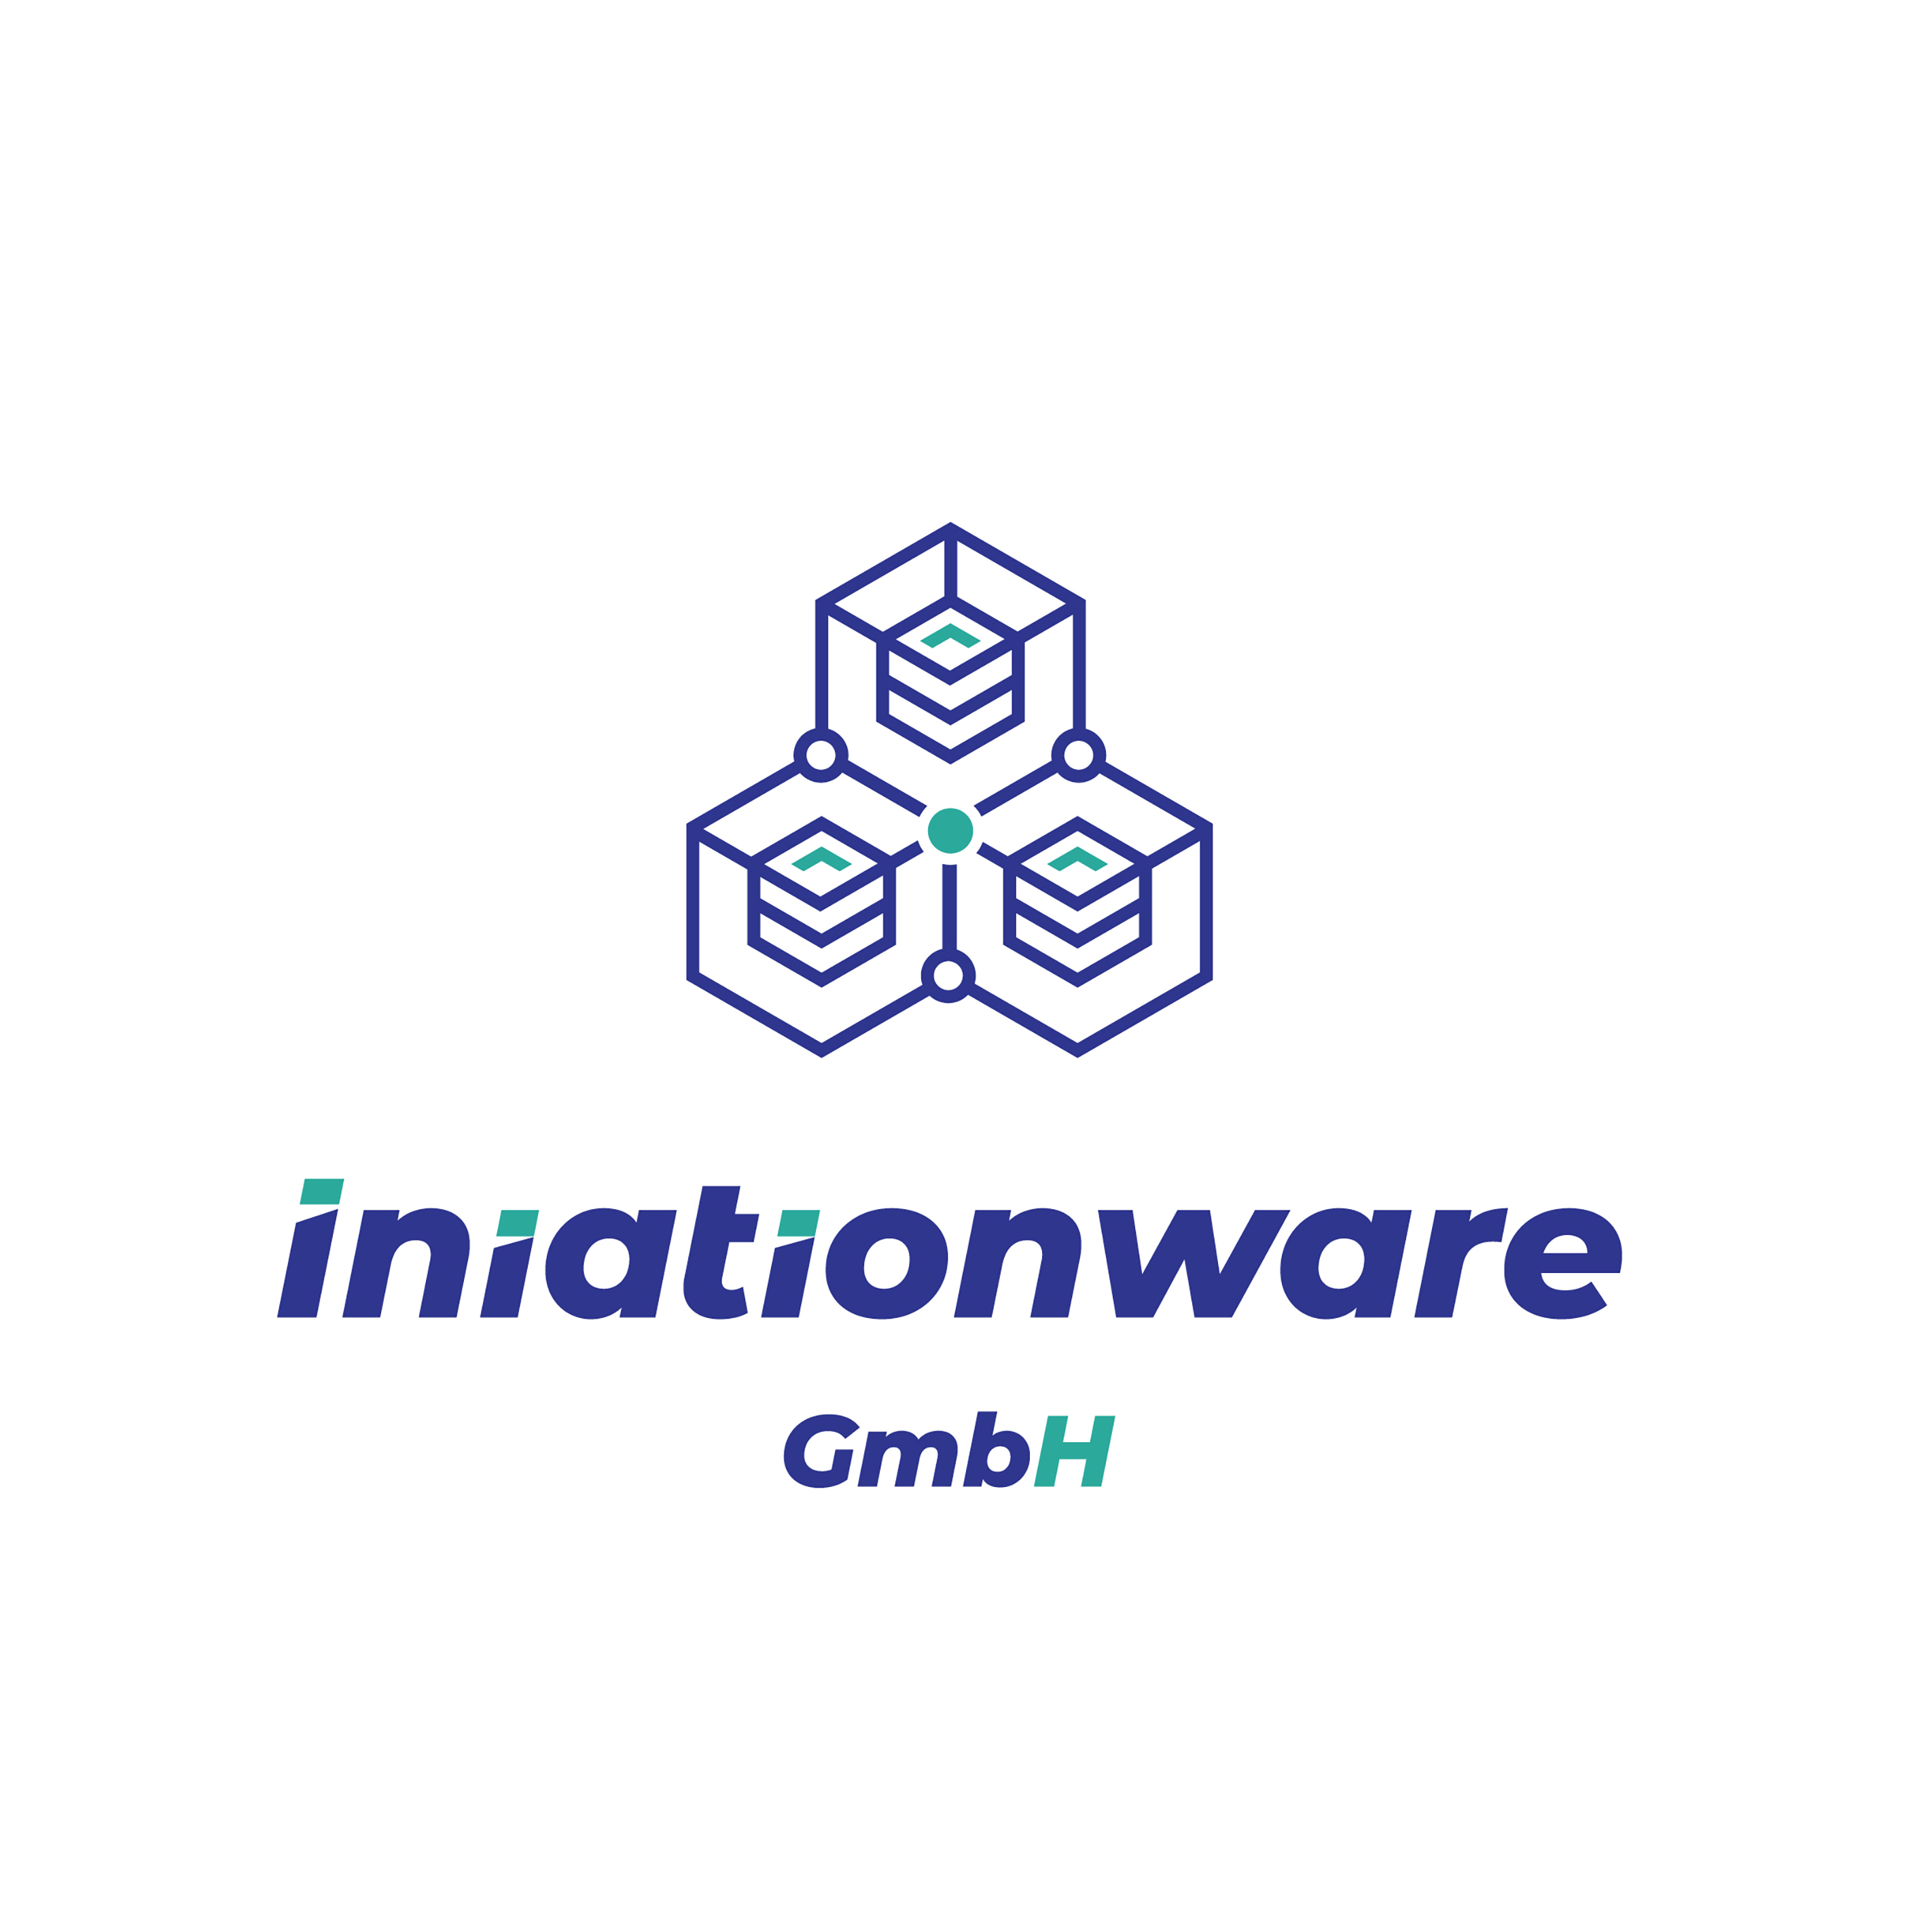 Iniationware GmbH in Lohne in Oldenburg - Logo